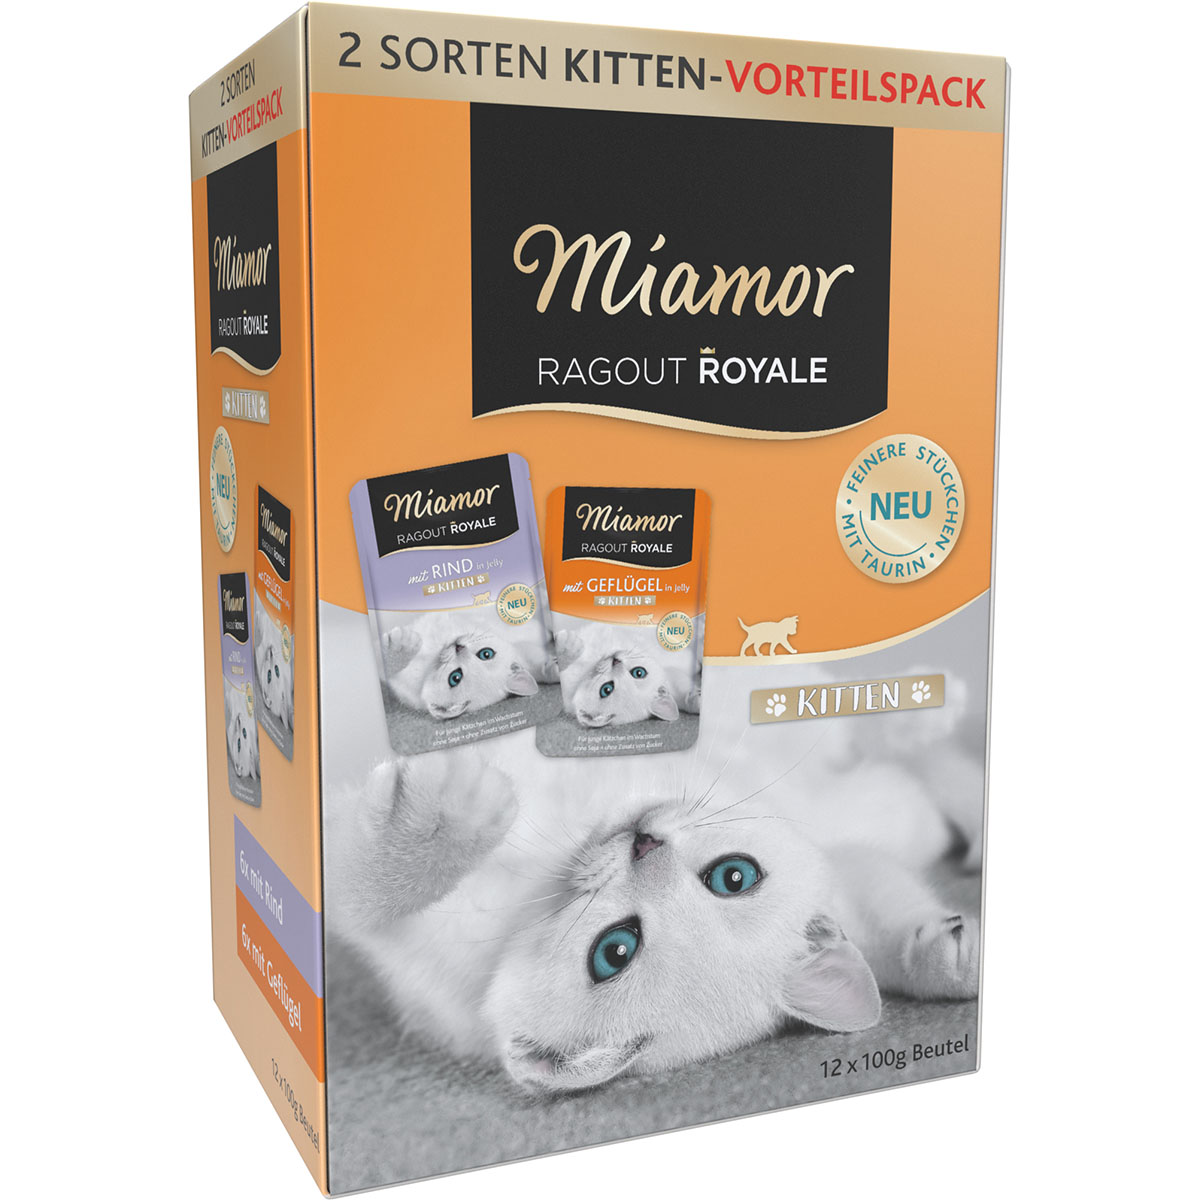 miamor ragout royale kitten multibox in jelly